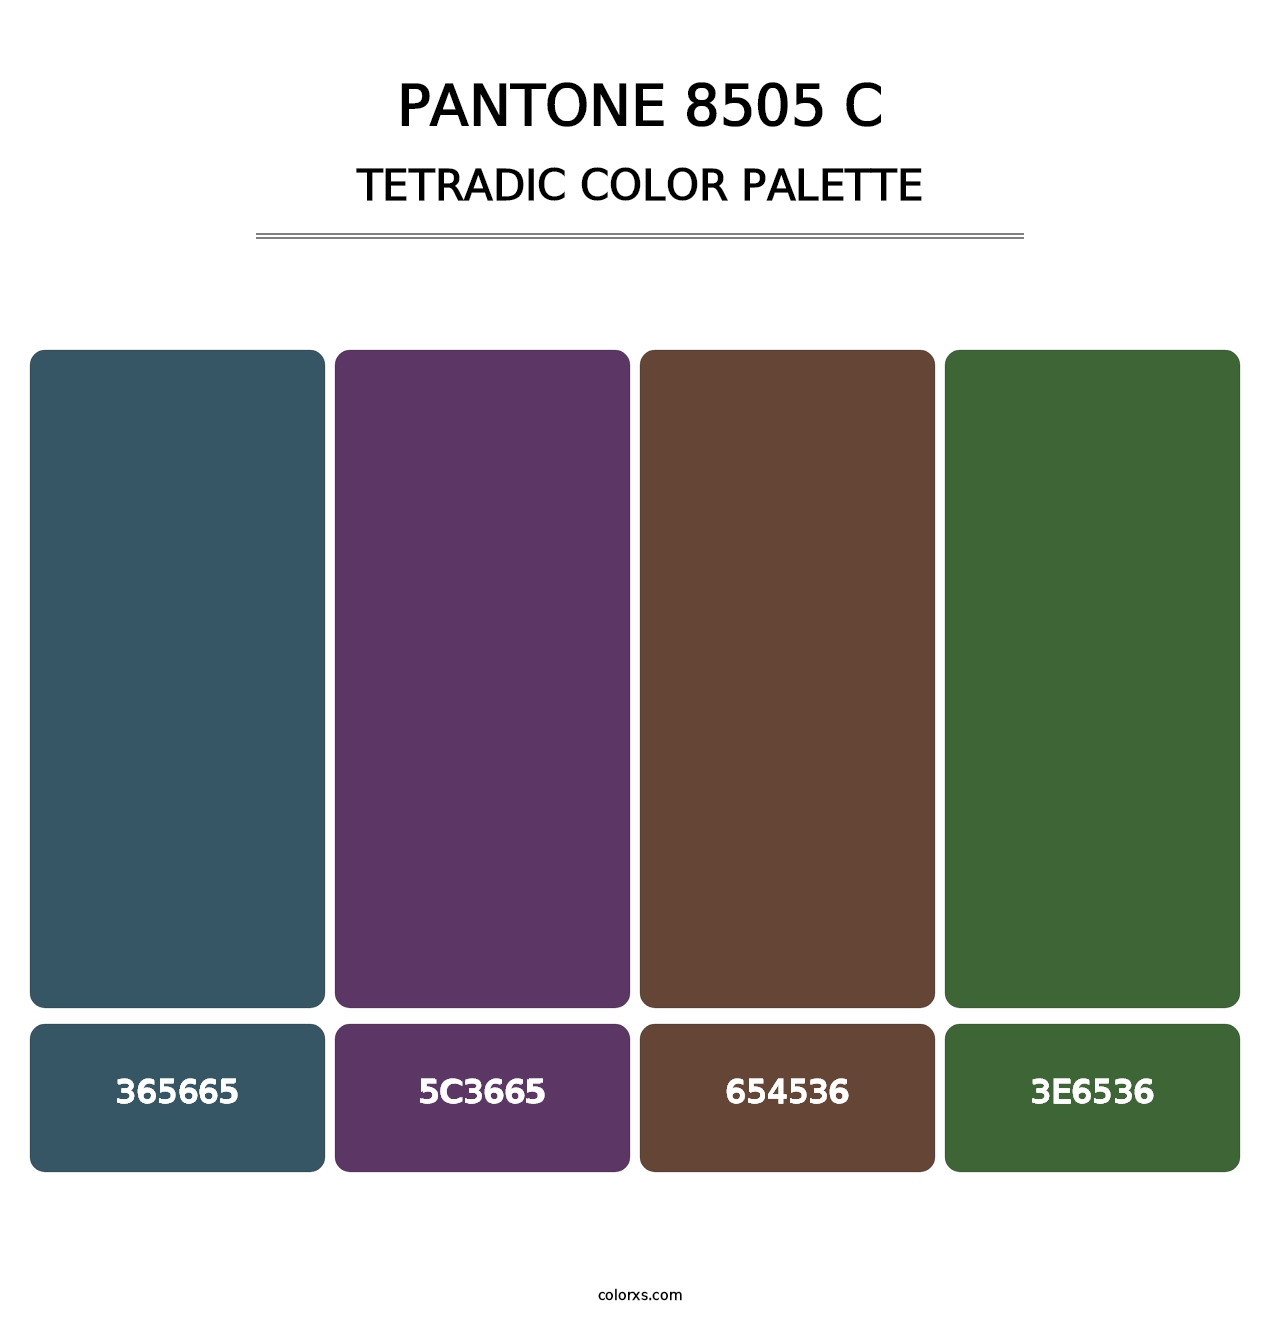 PANTONE 8505 C - Tetradic Color Palette